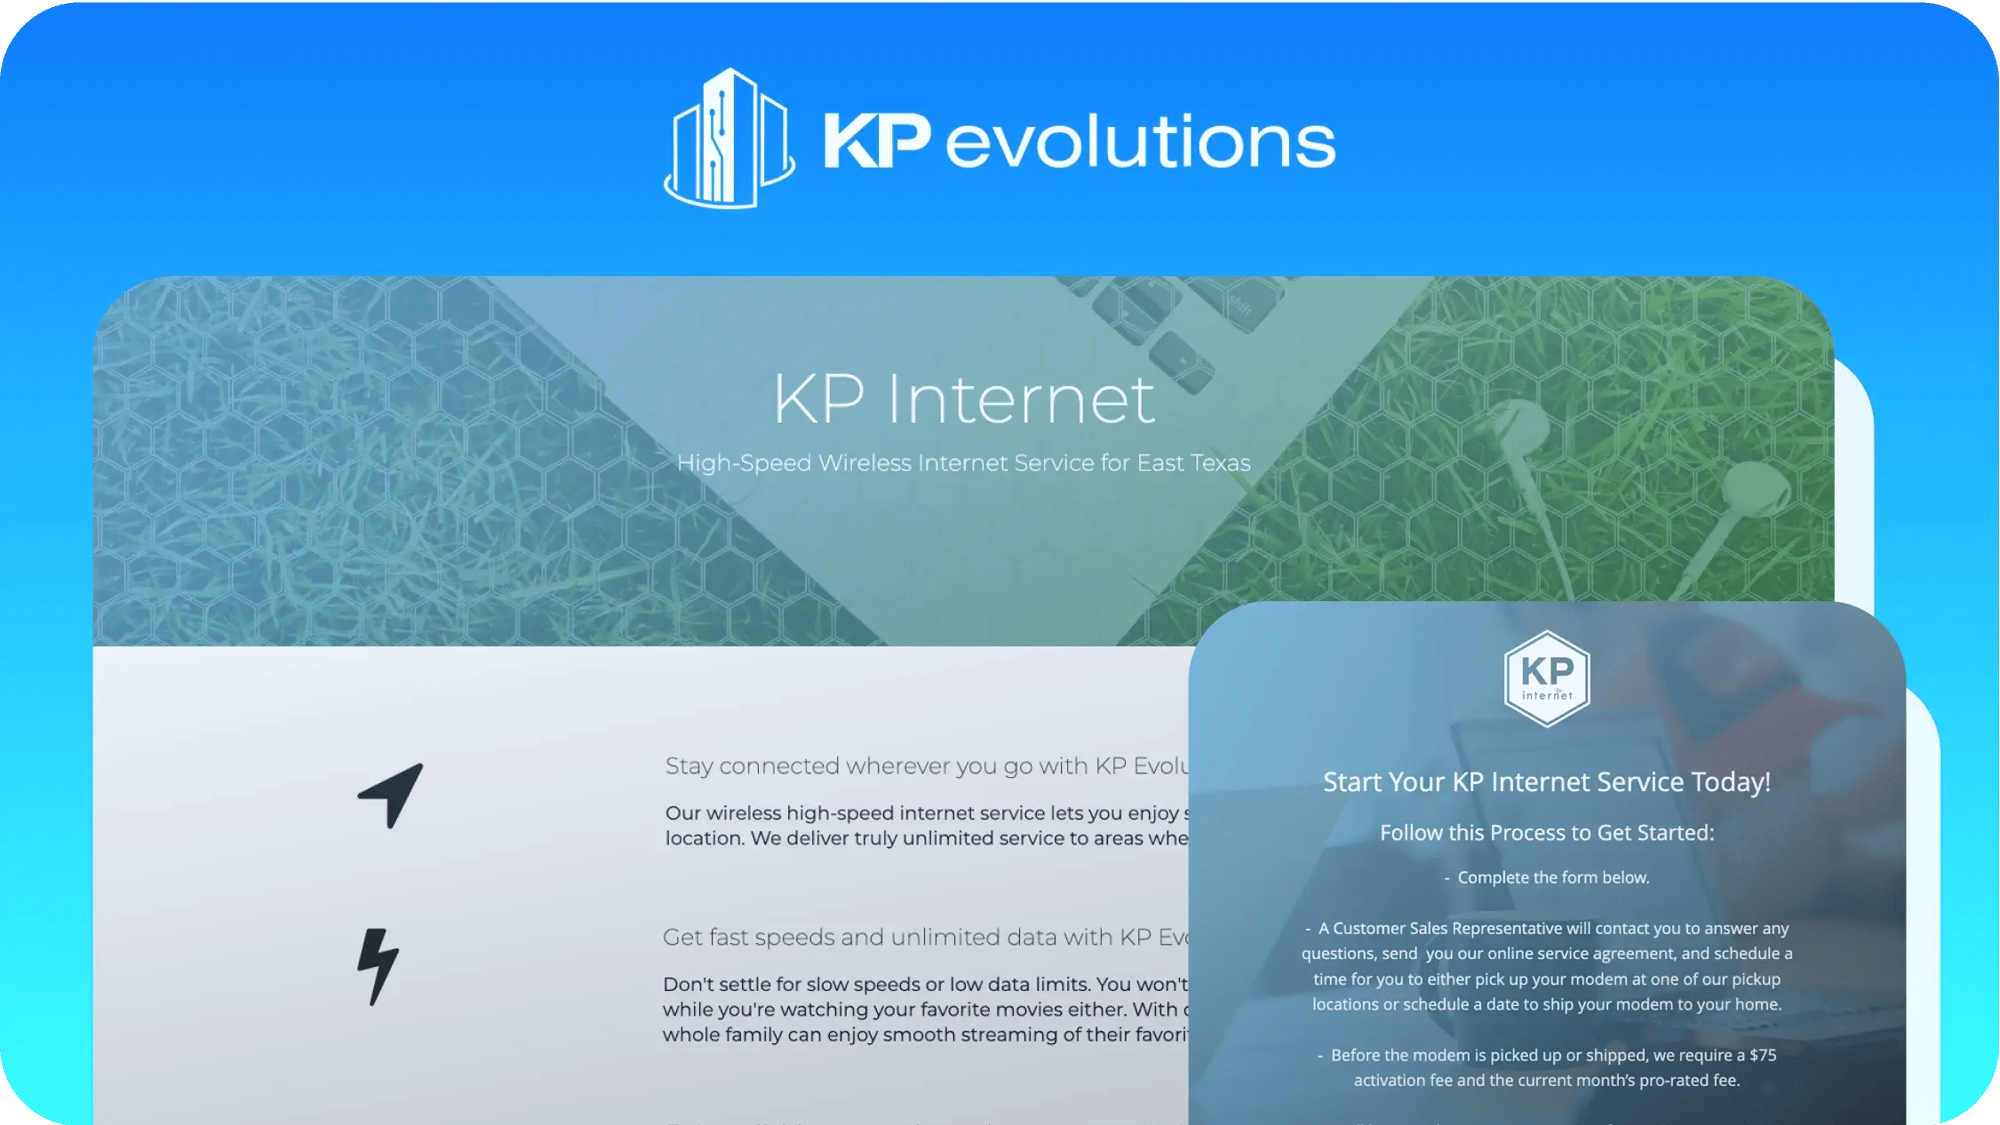 KP evolutions case study